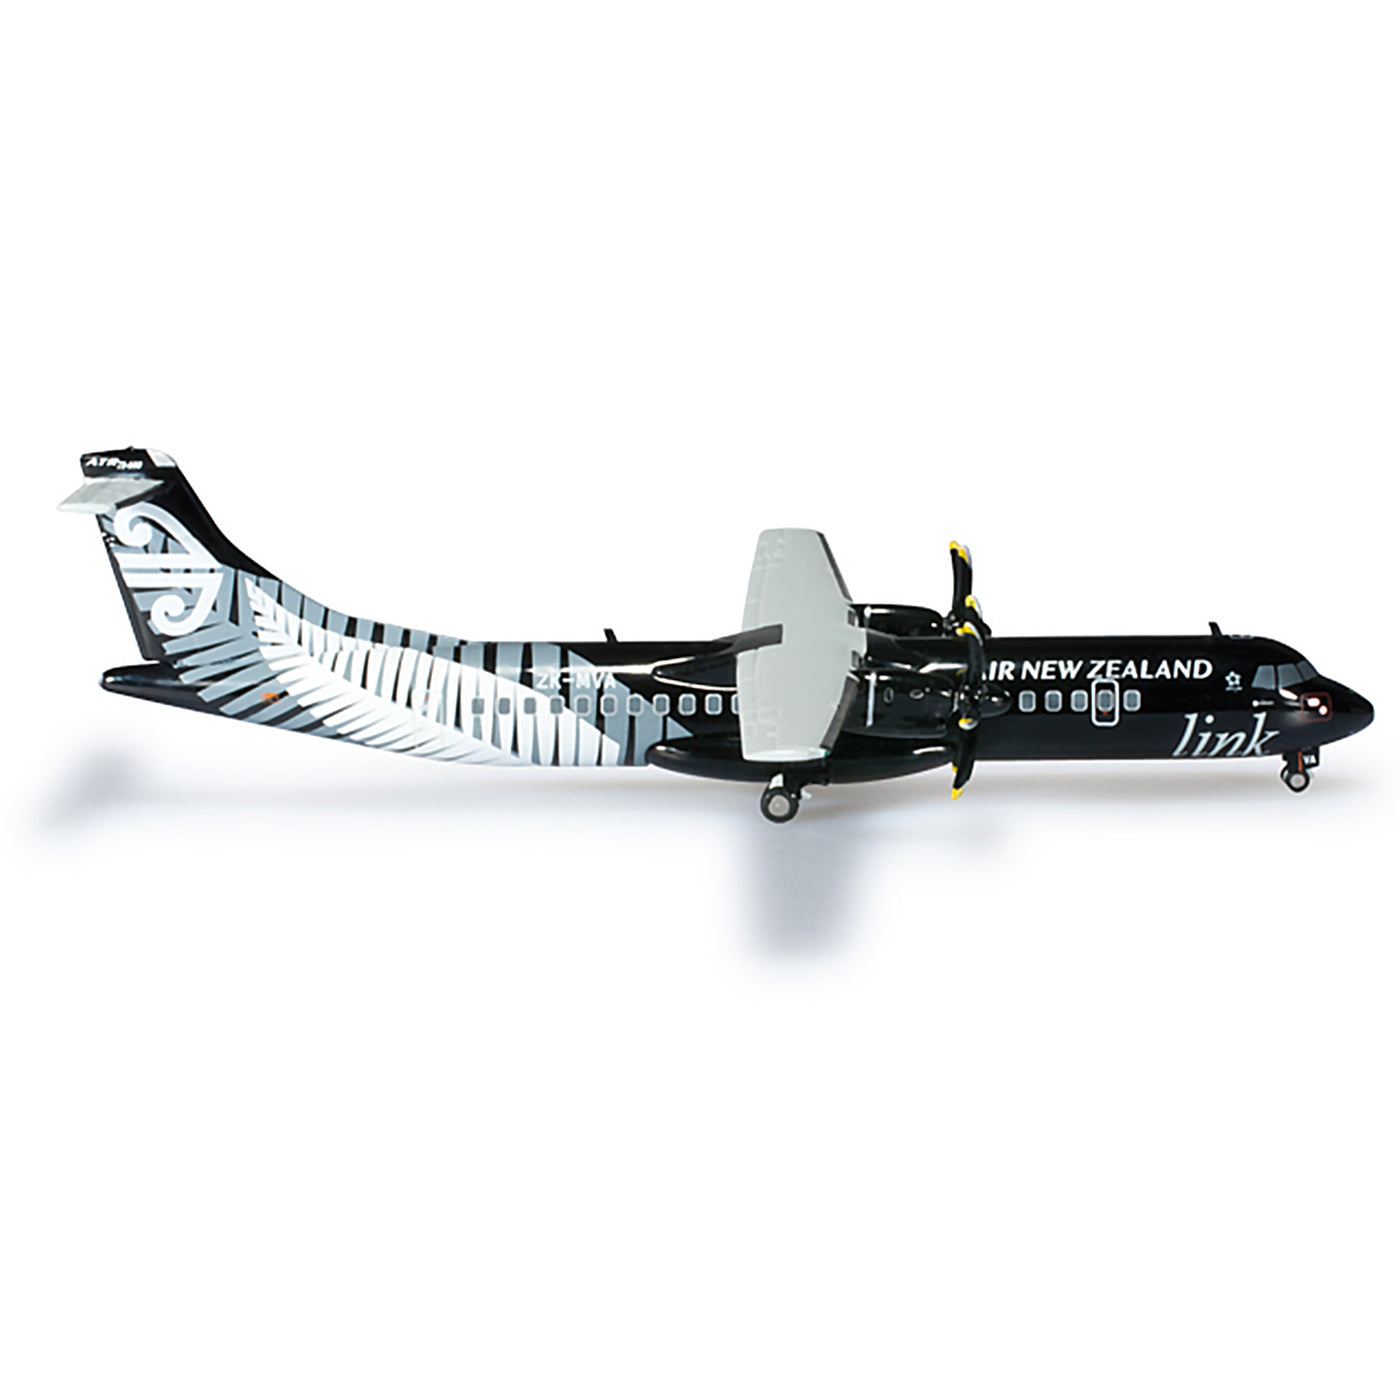 1/200 Air New Zealand Link ATR72600